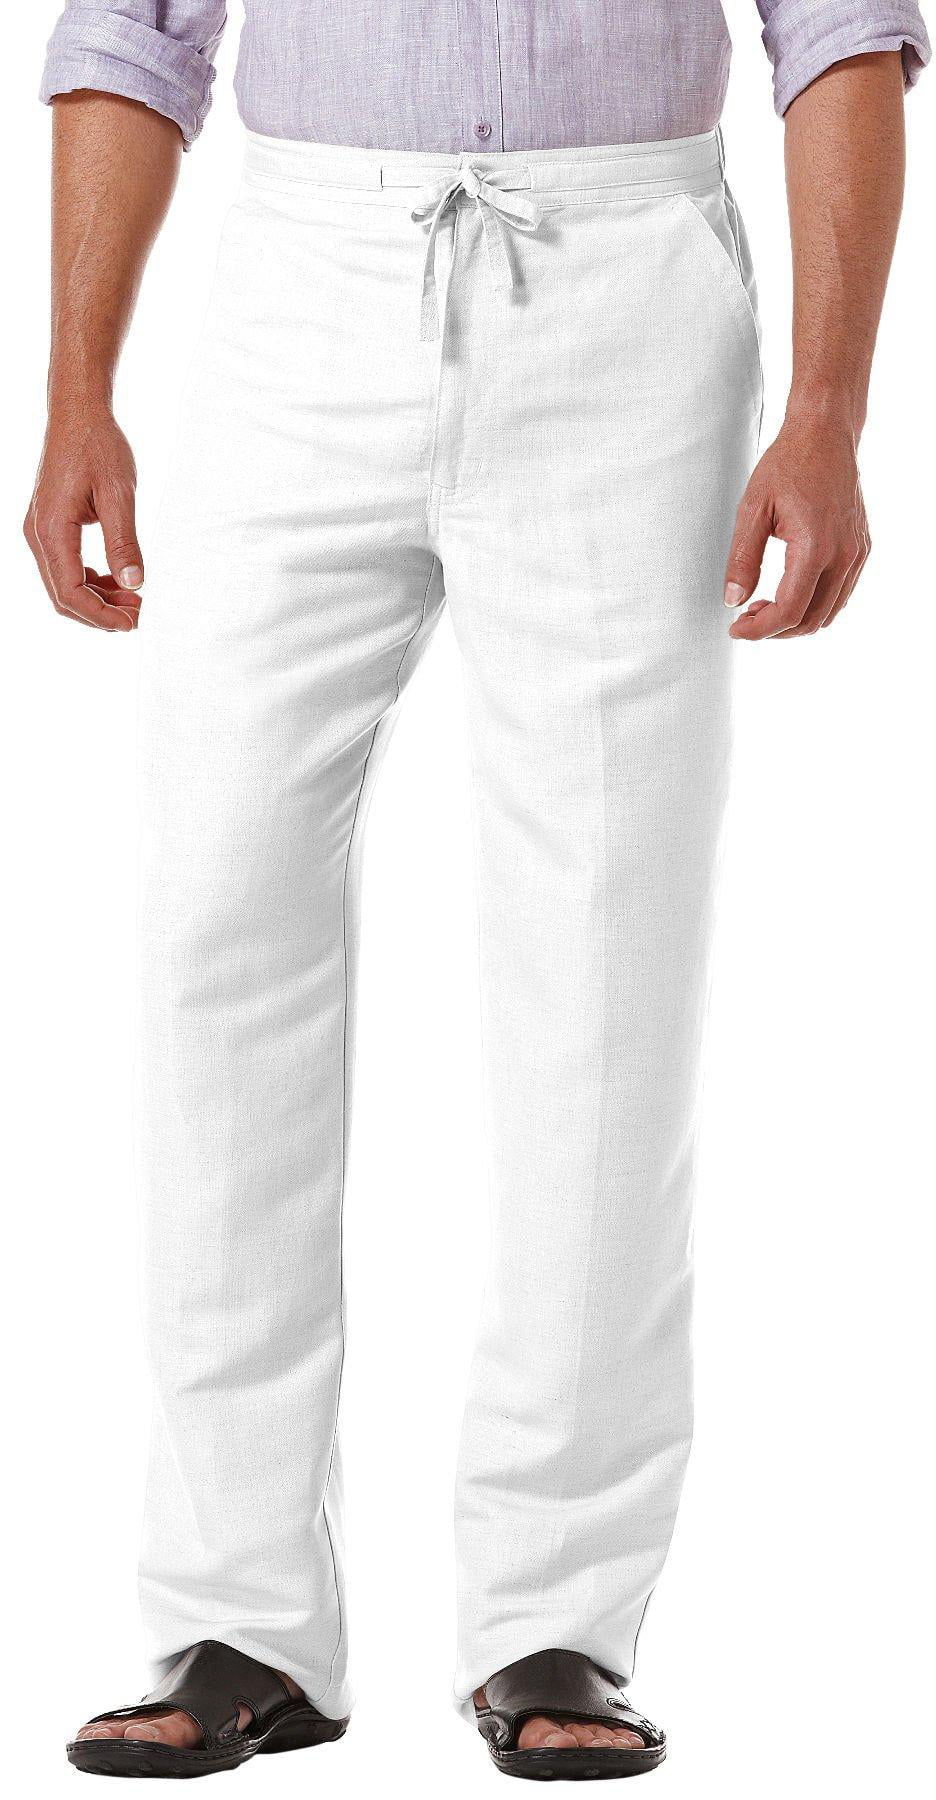 ZHENWEI Mens Cotton Linen Drawstring Pants Elastic Waist Casual Jogger Yoga  Pants - Walmart.com